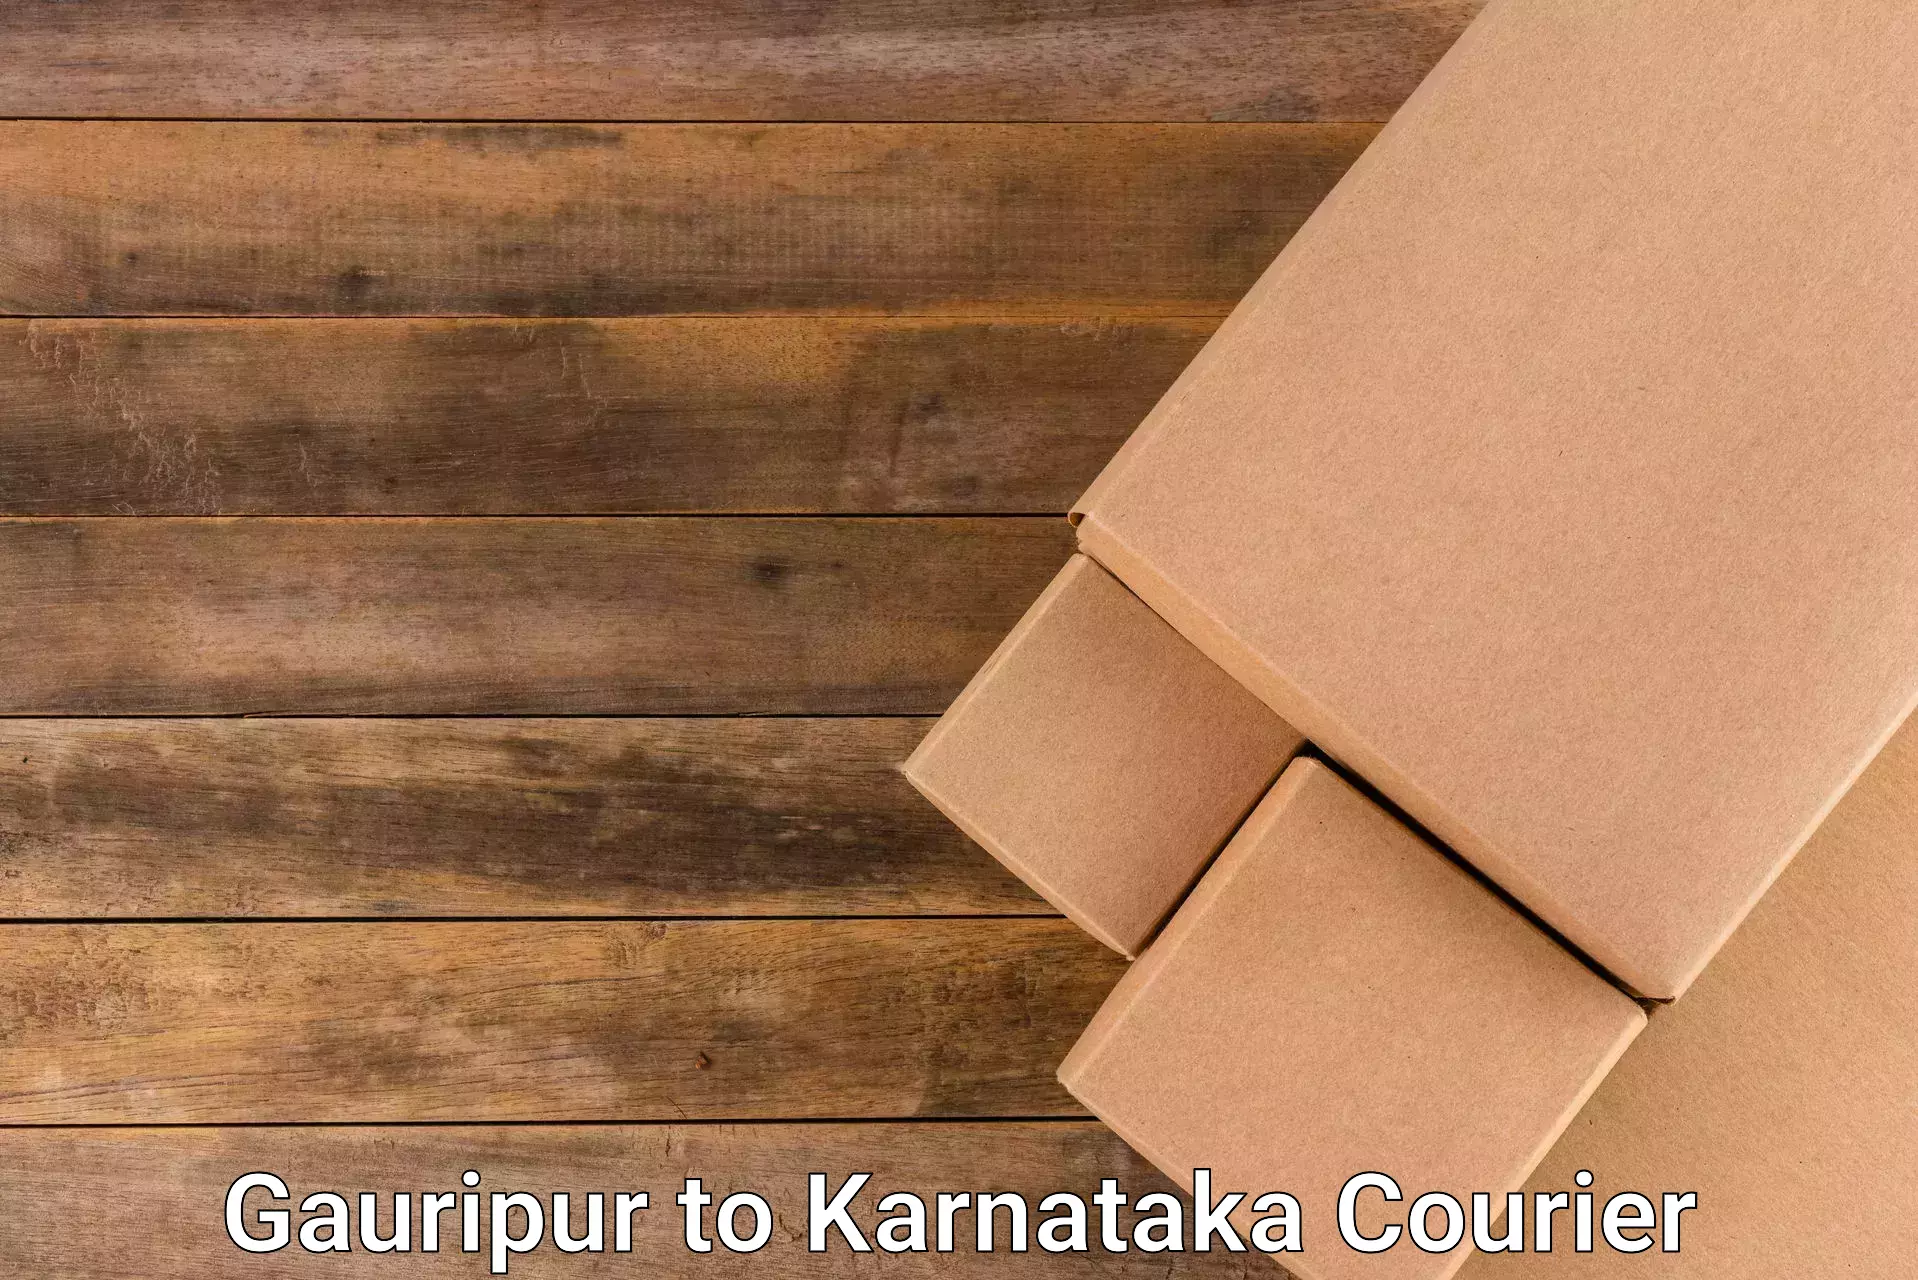 User-friendly courier app Gauripur to Basavana Bagewadi